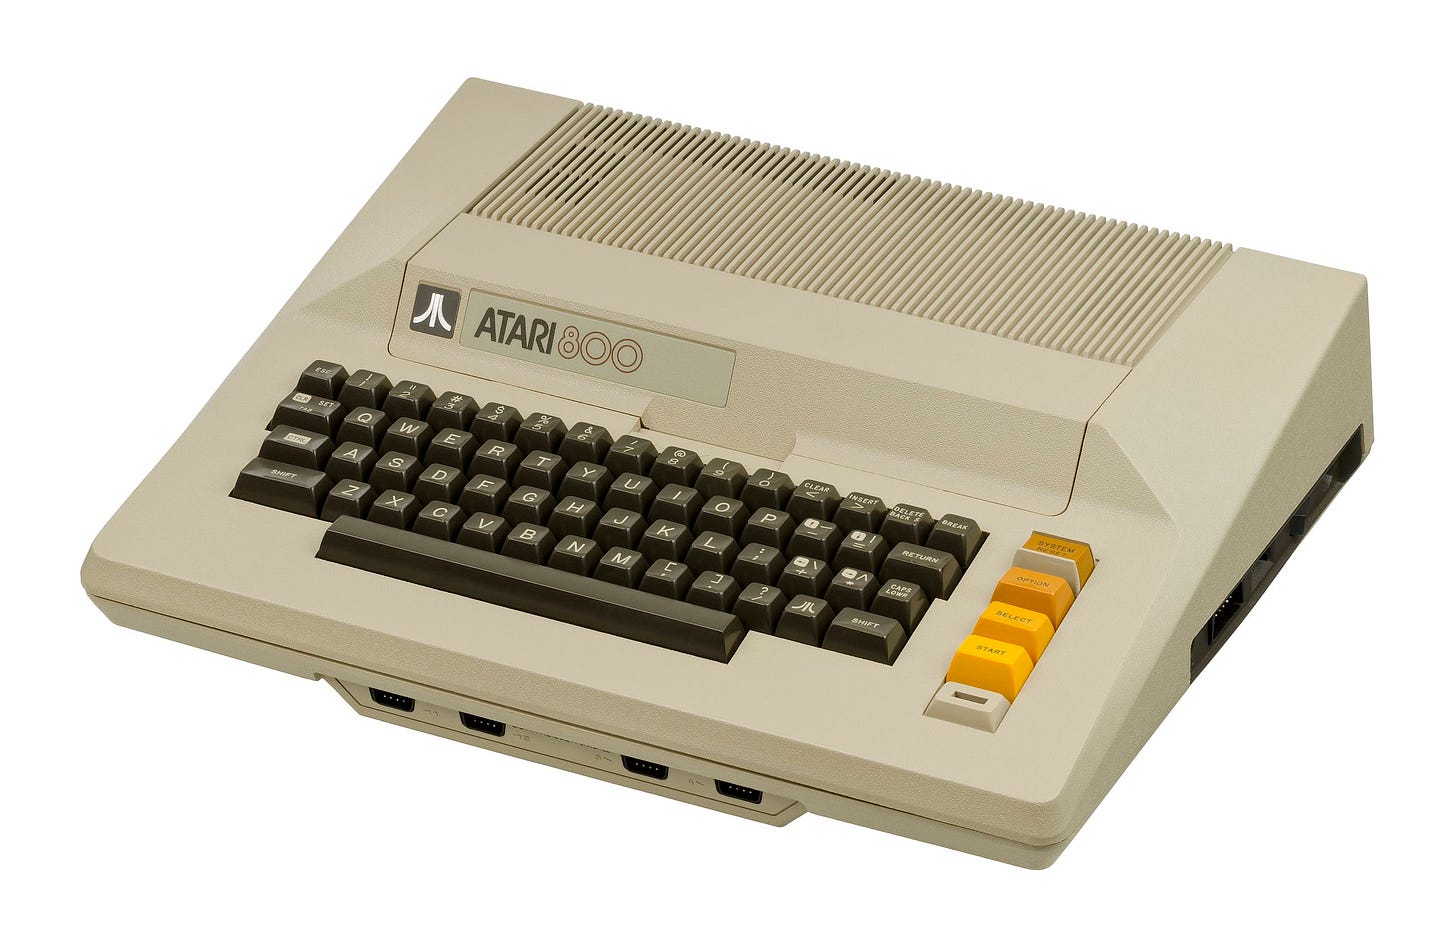 Photo of an Atari 800 computer.